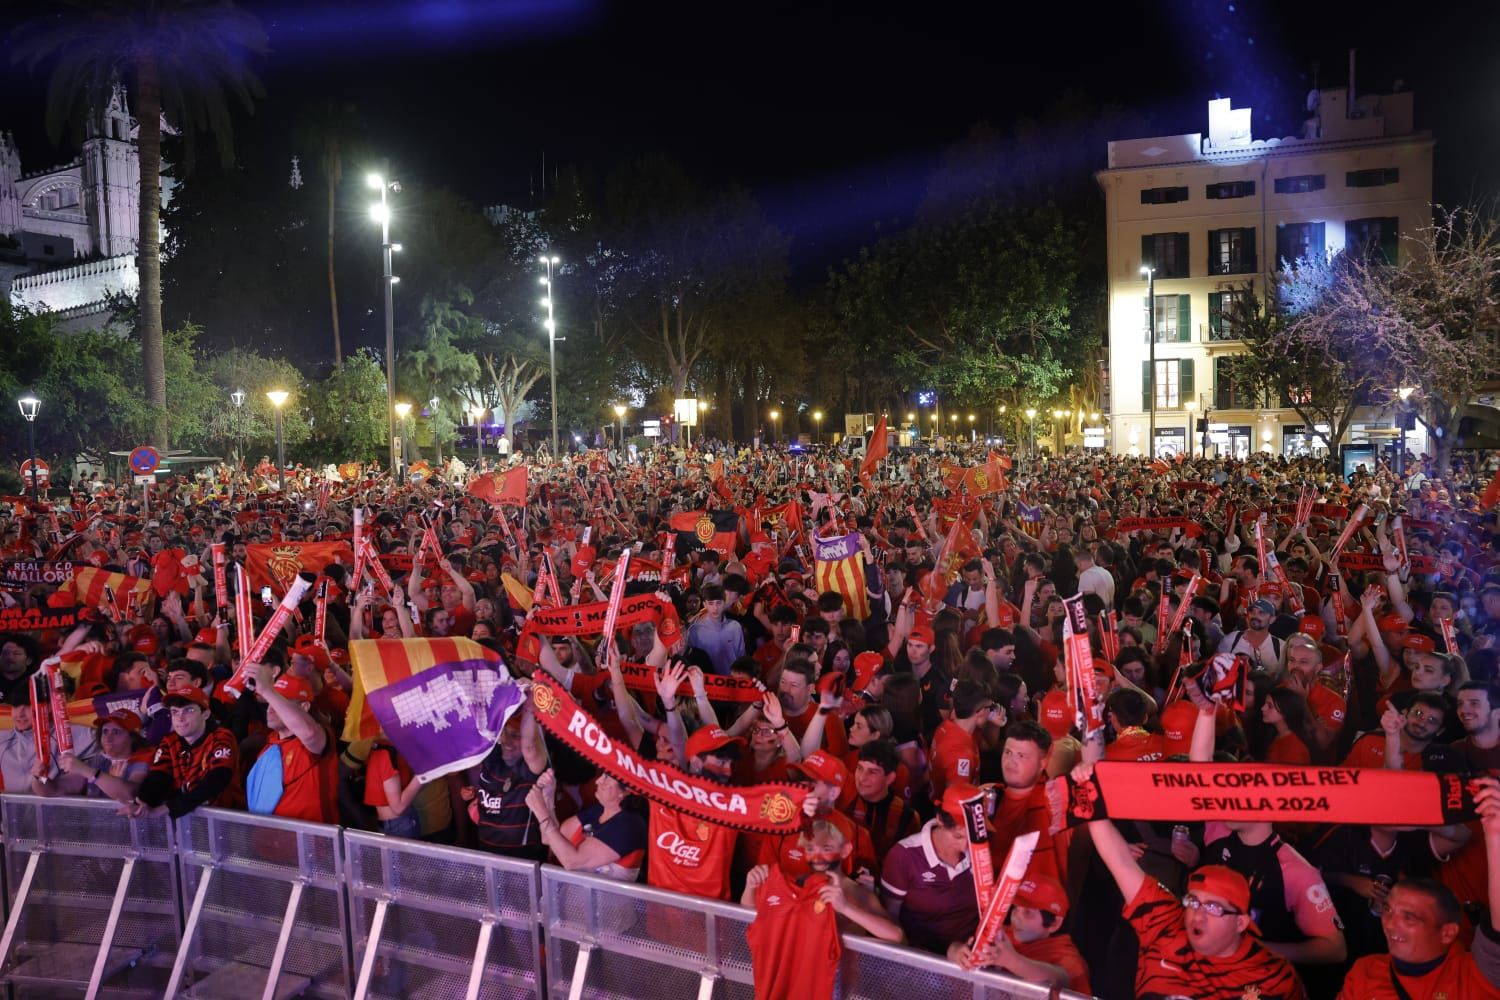 FOTOS | La fiesta de la final de la Copa en la plaza de la Reina de Palma